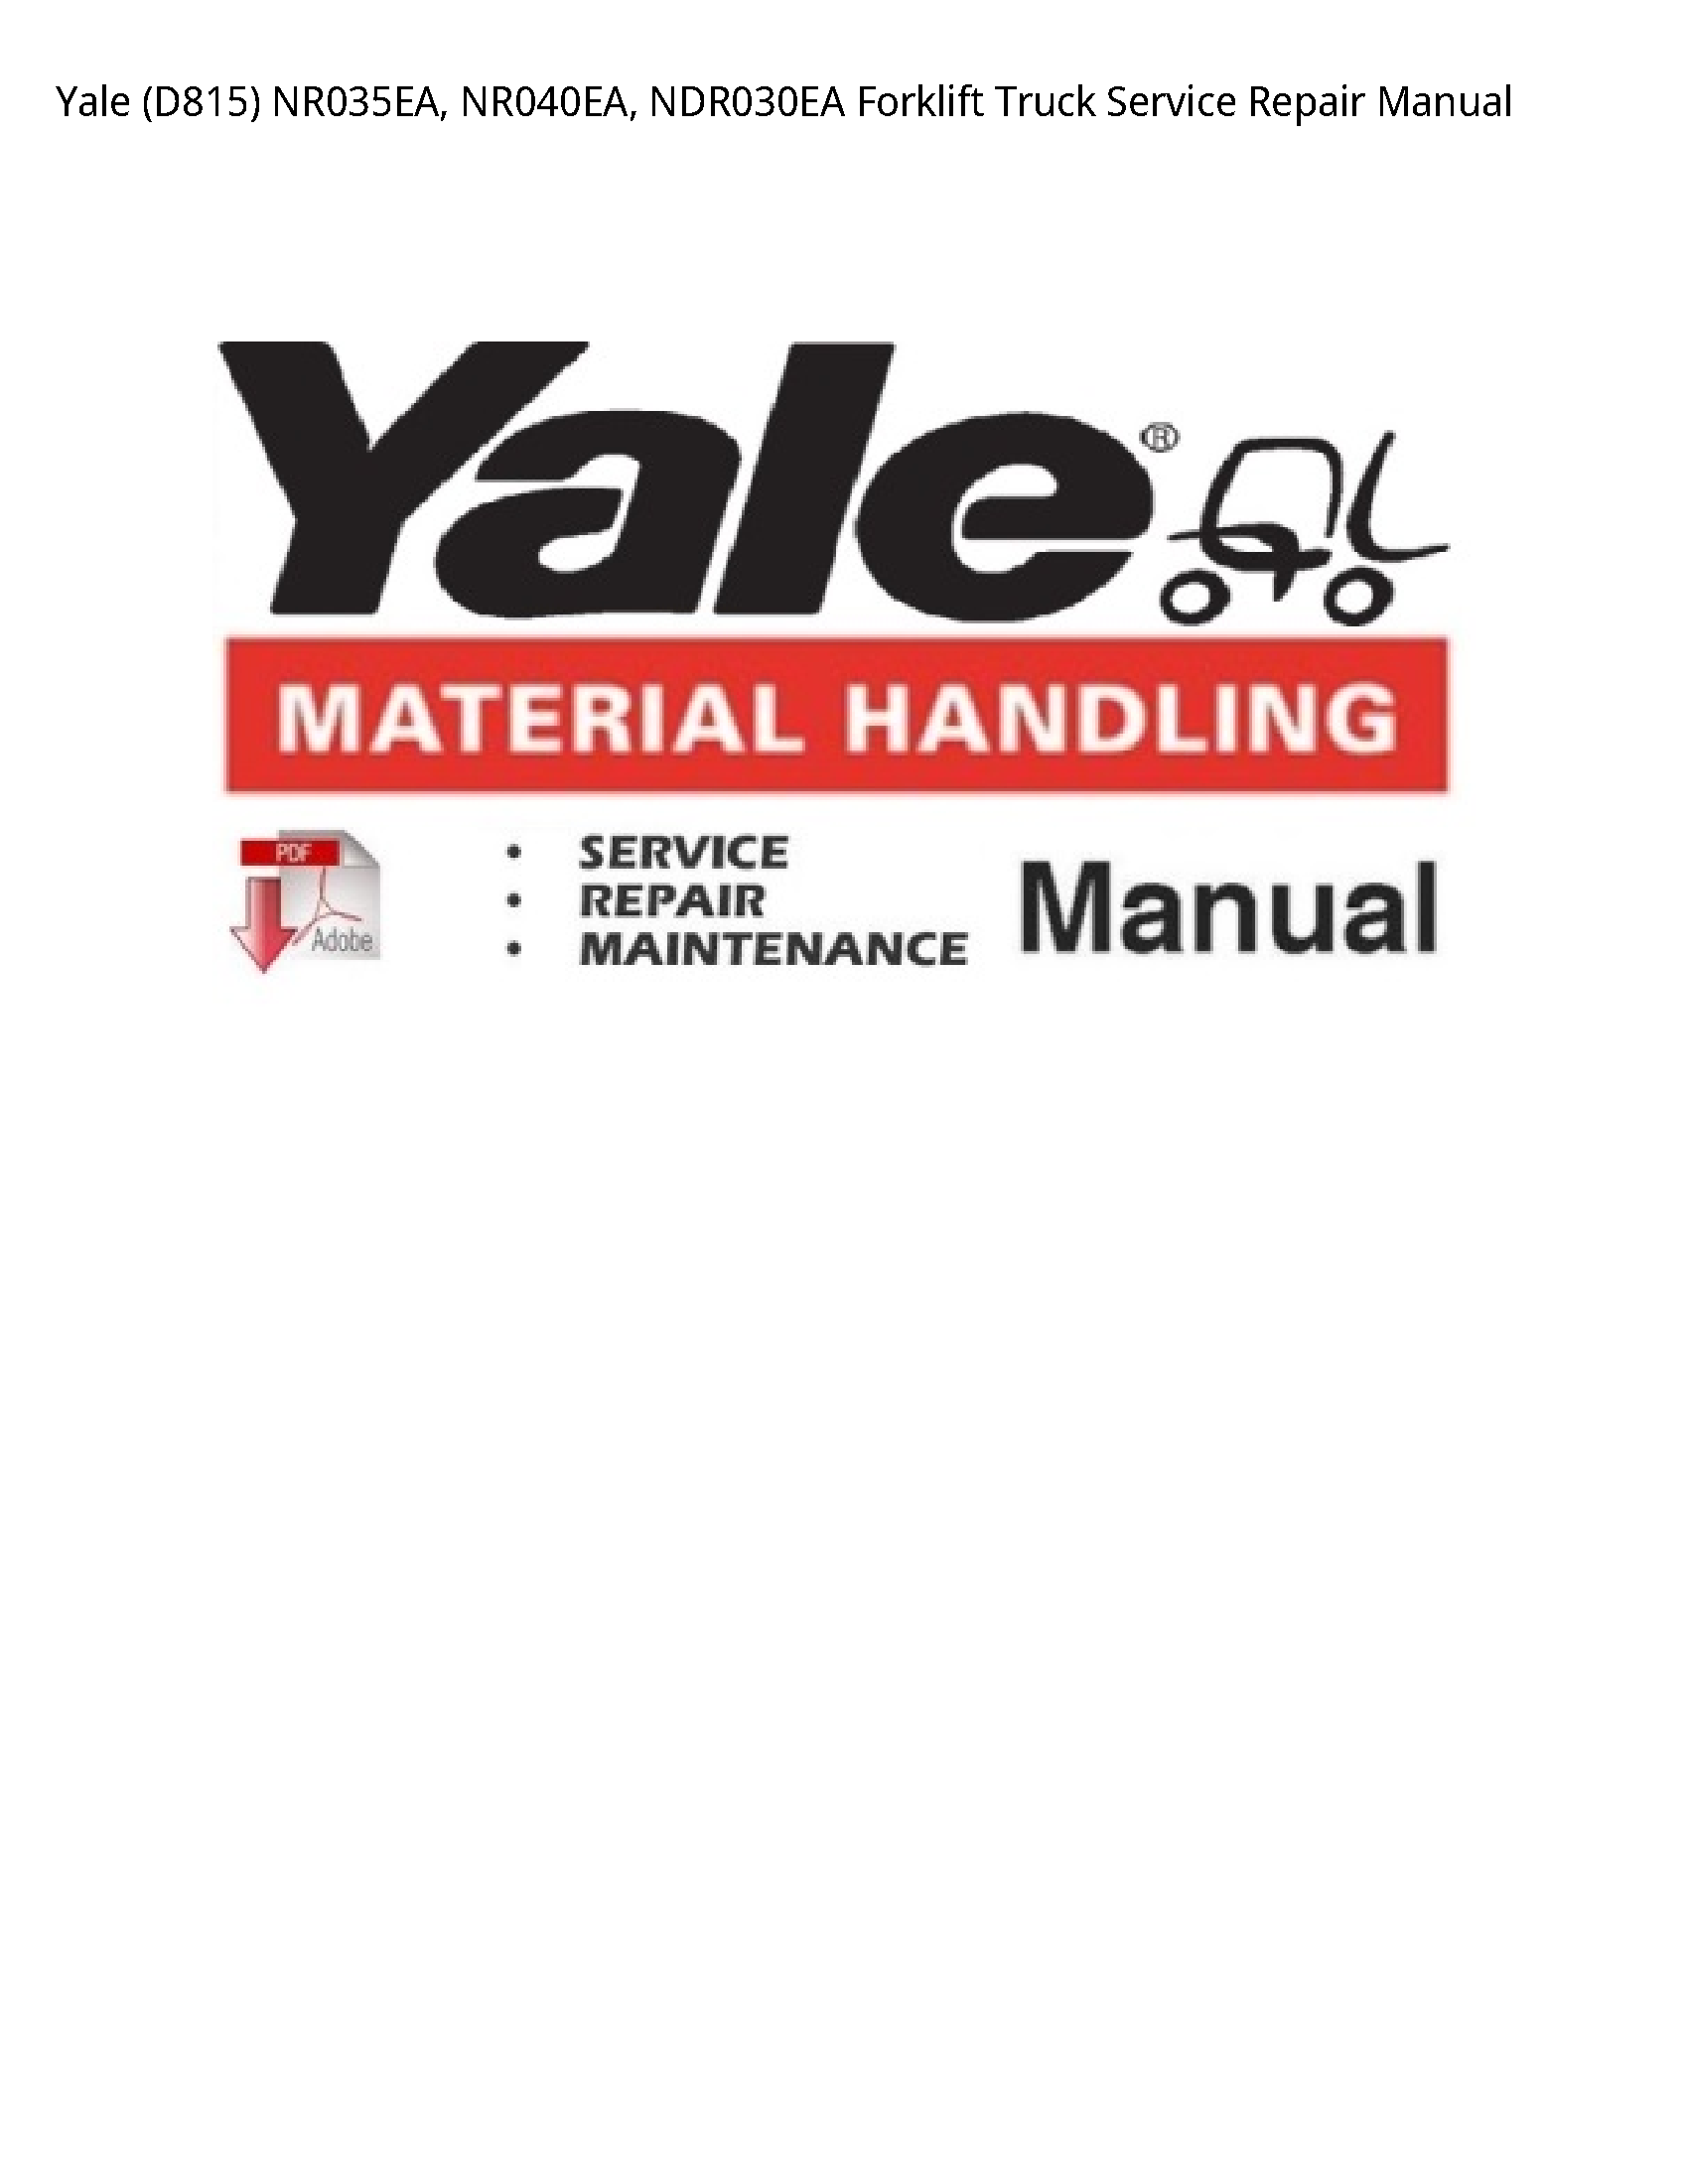 Yale (D815) Forklift Truck manual